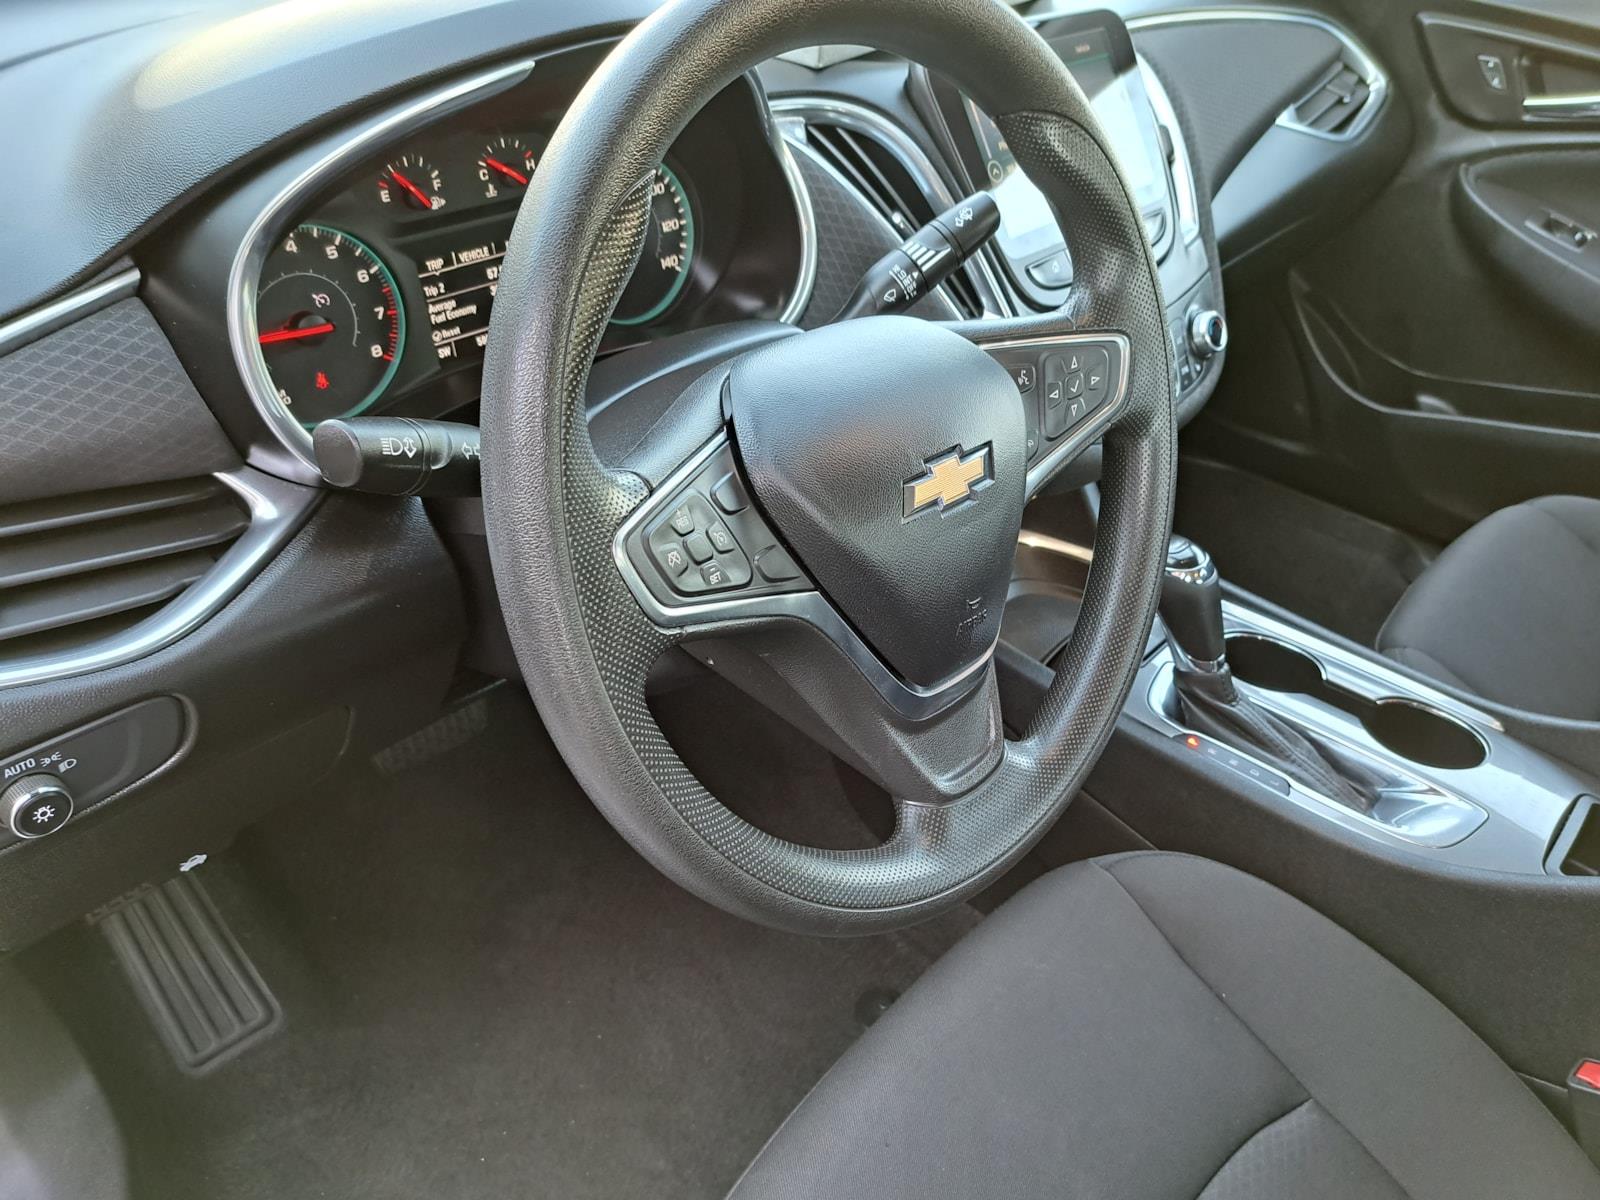 2020 Chevrolet Malibu LT Sedan 4 Dr. Front Wheel Drive 7